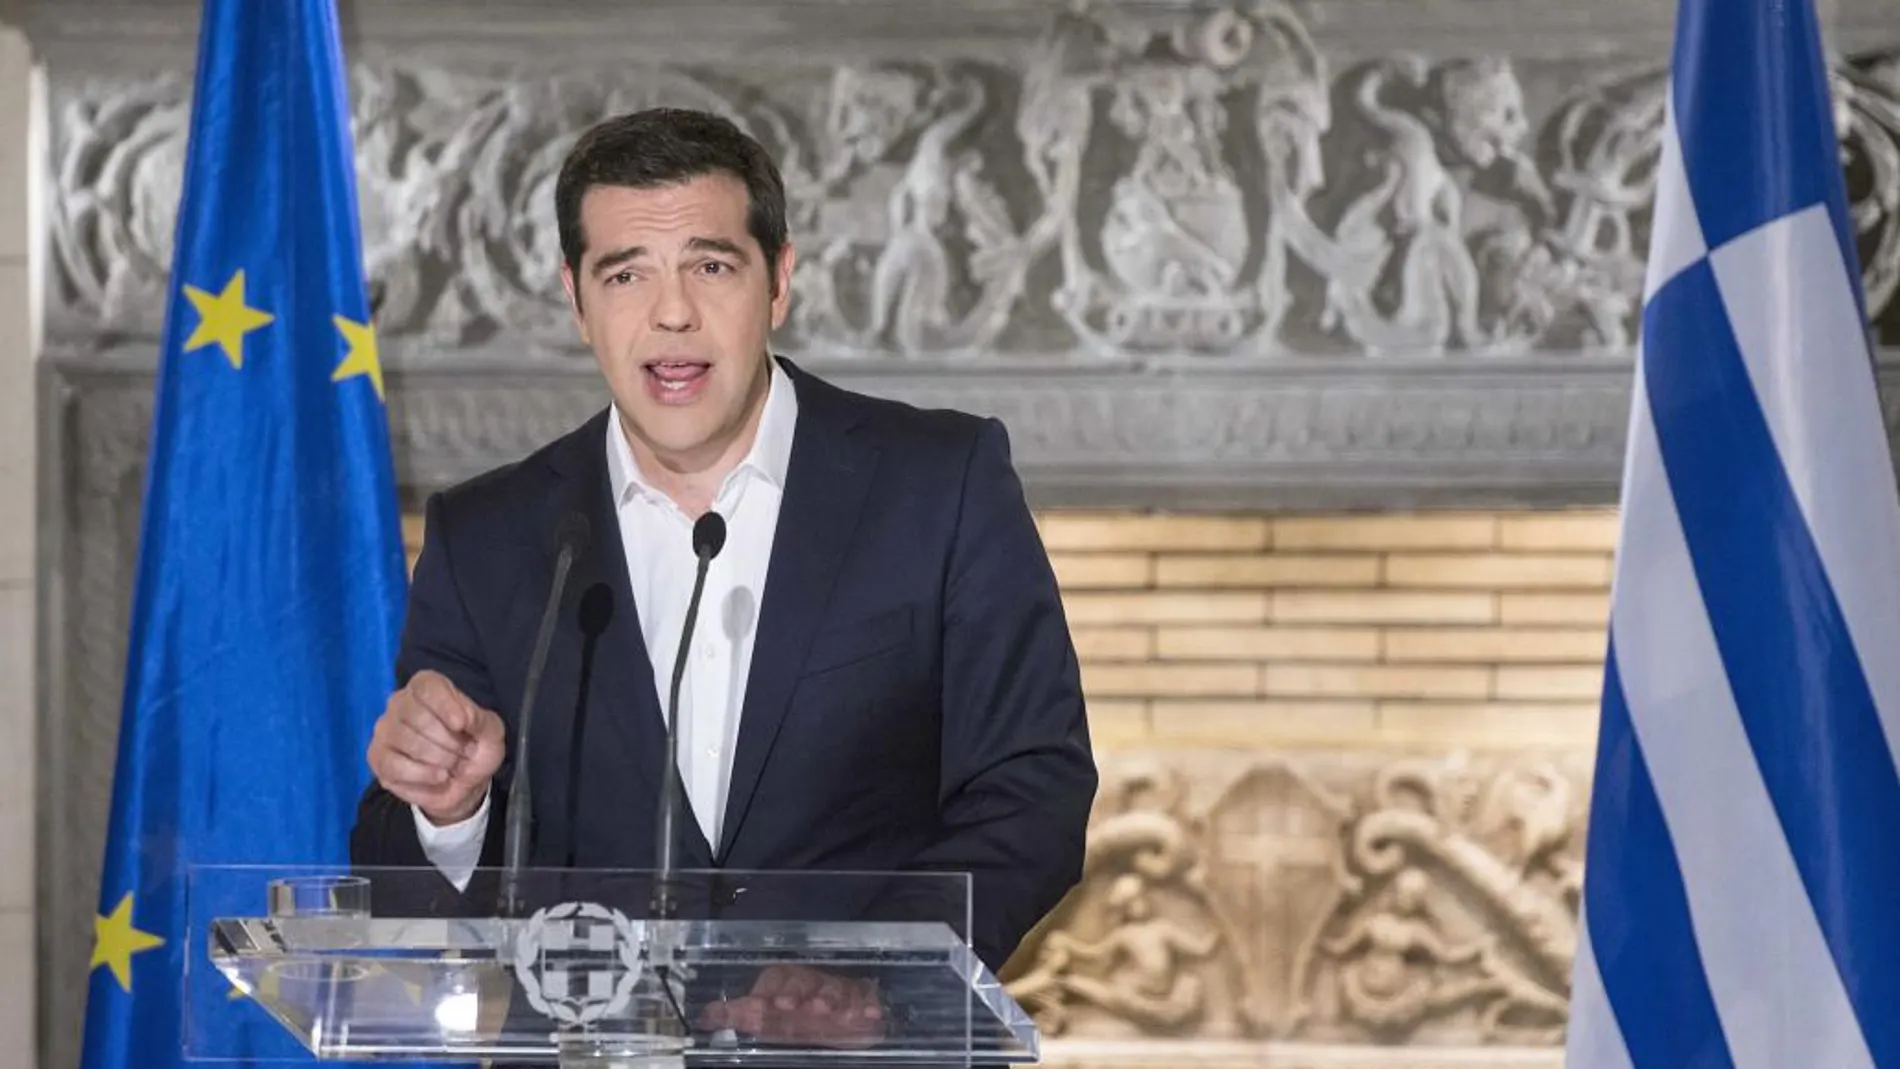 Intervención de Alexis Tsipras tras el referéndum